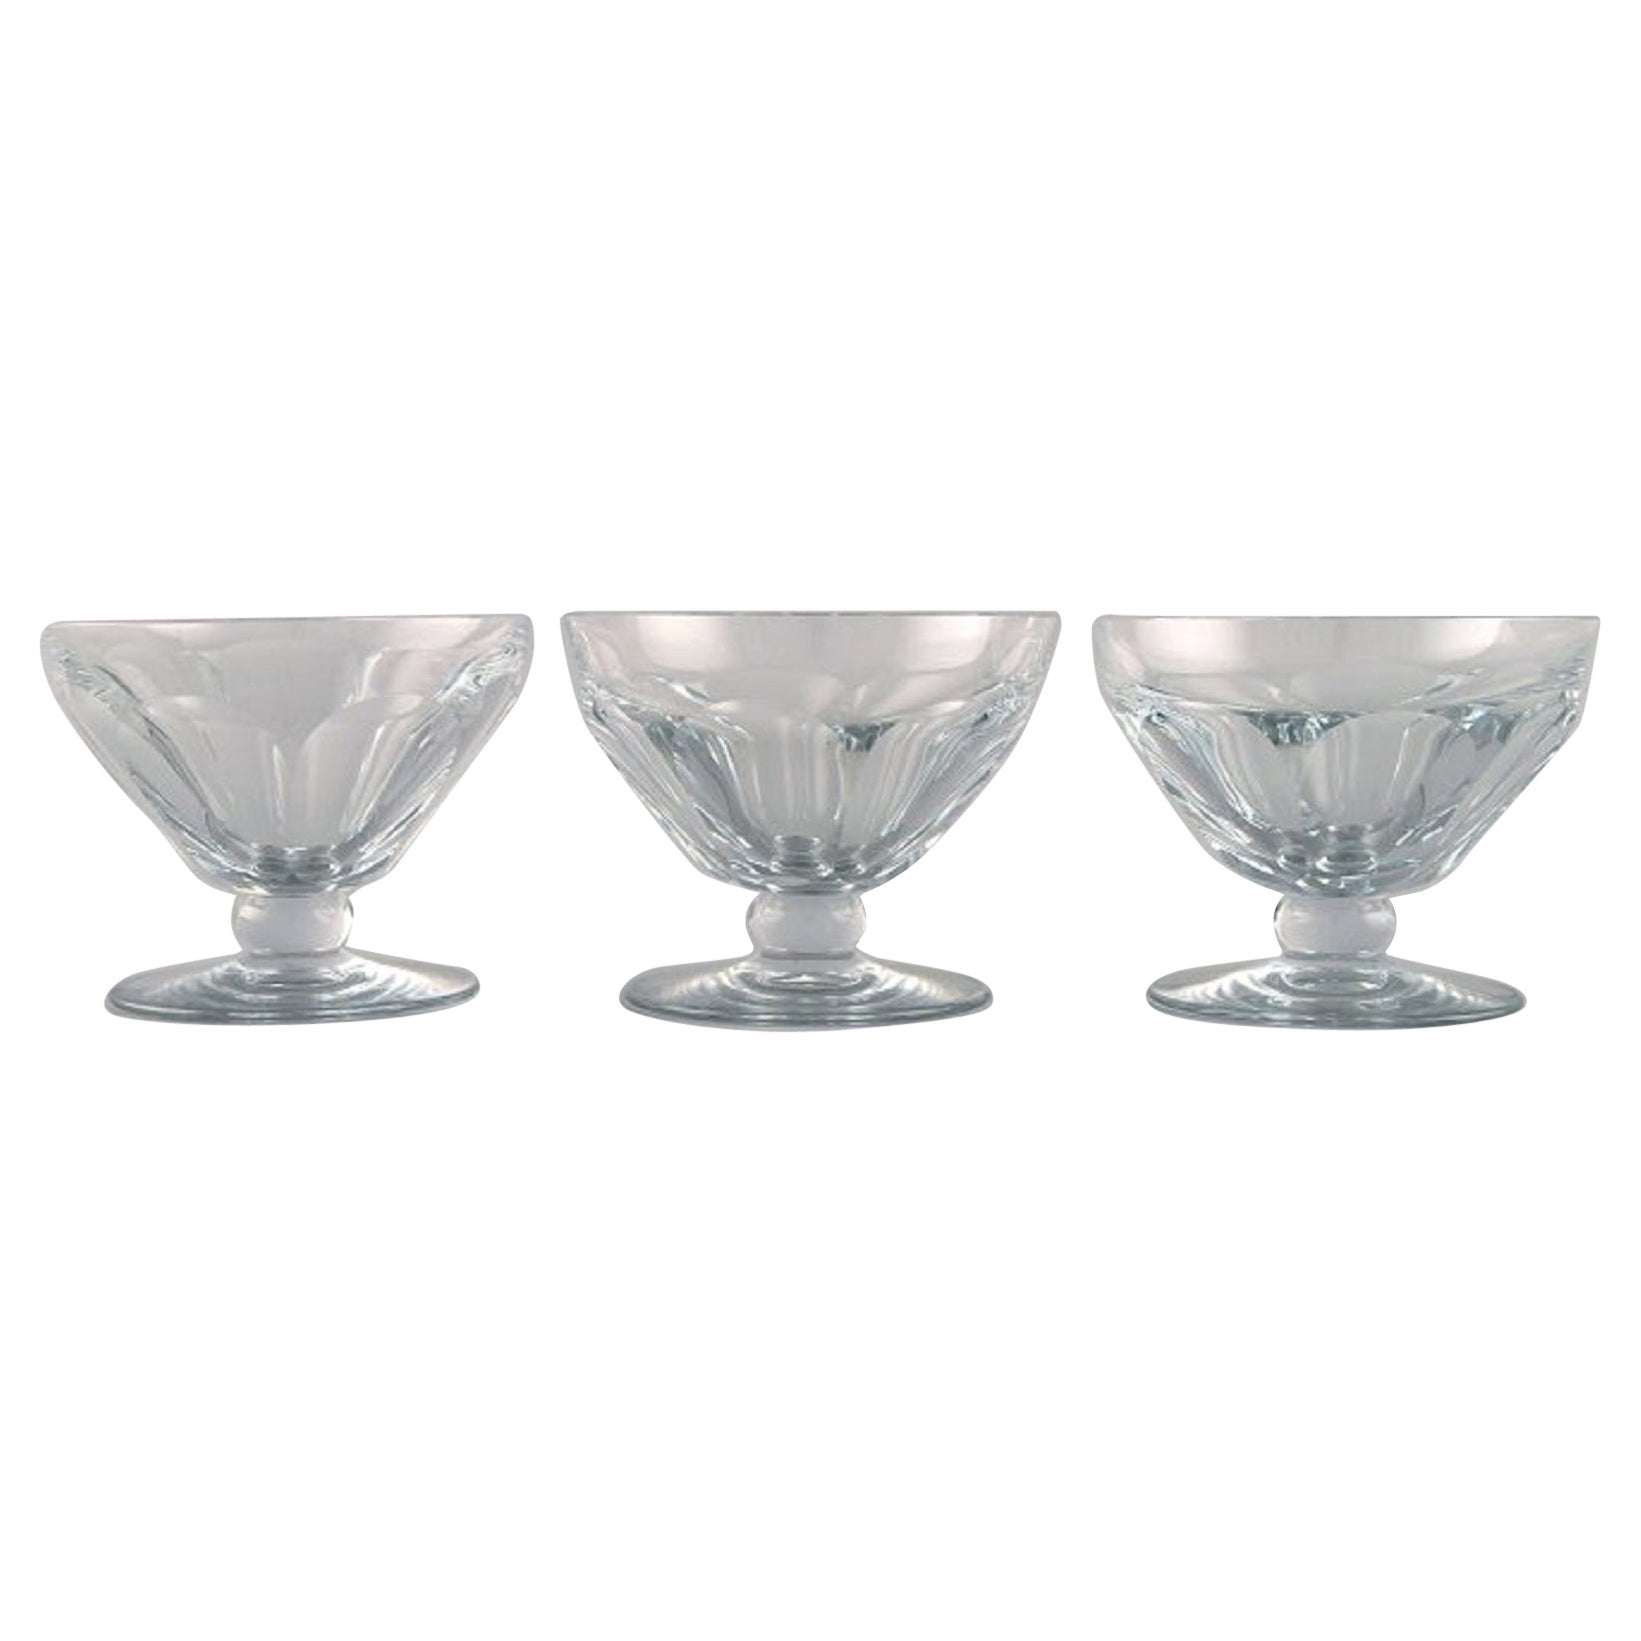 Baccarat, Frankreich, drei Tallyrand-Gläser aus klarem, mundgeblasenem Kristallglas